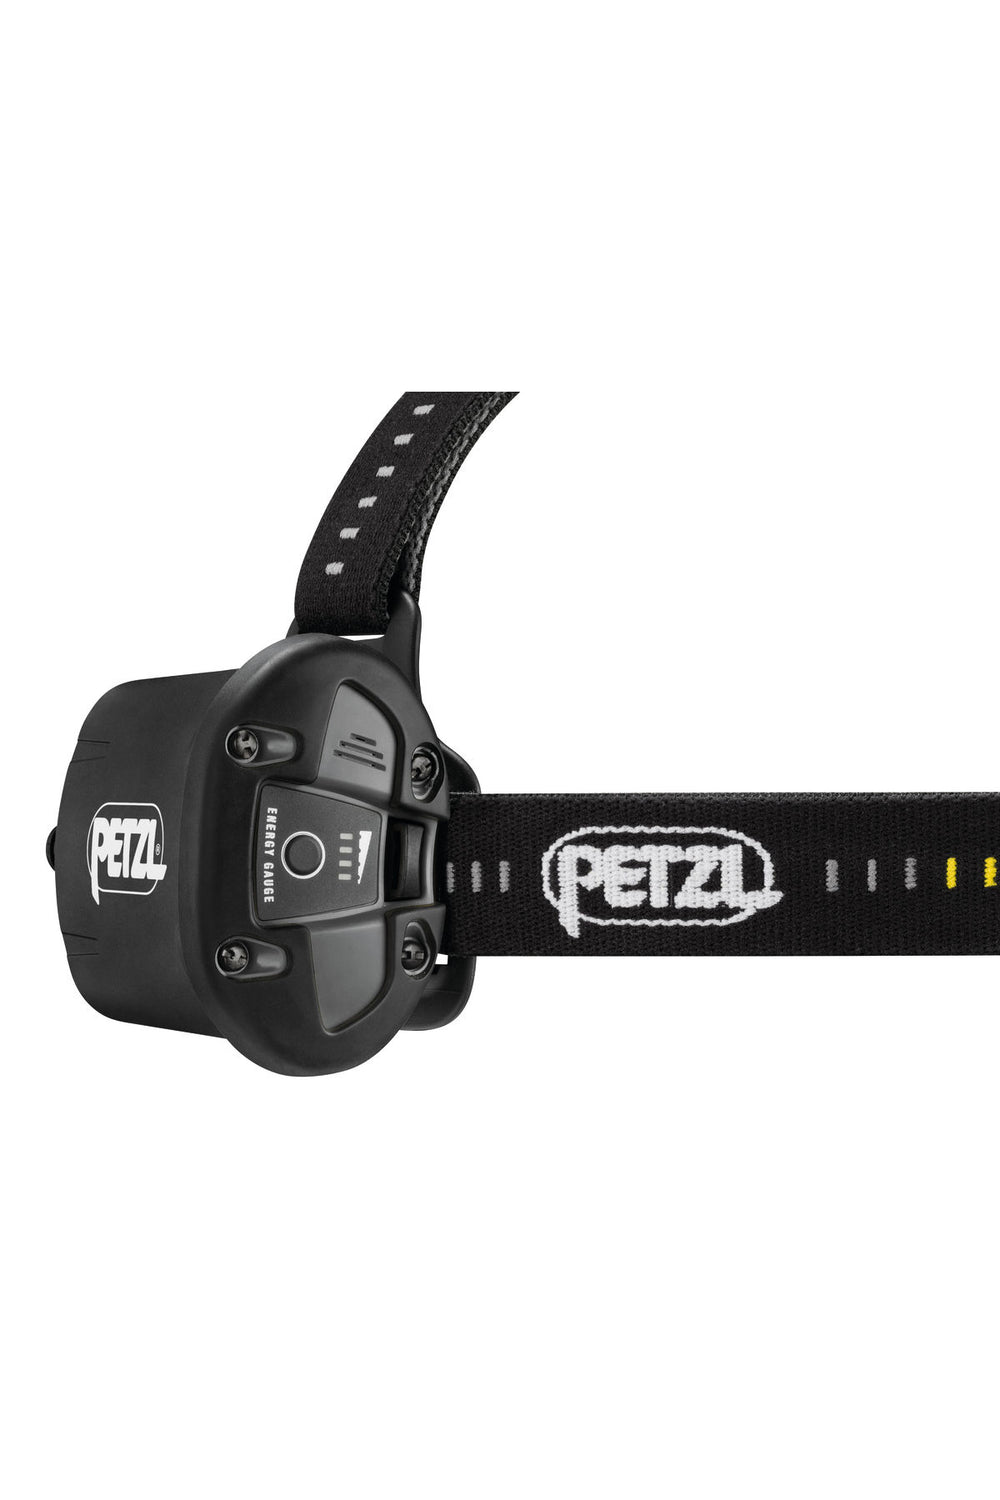 Petzl - Duo S (UK)